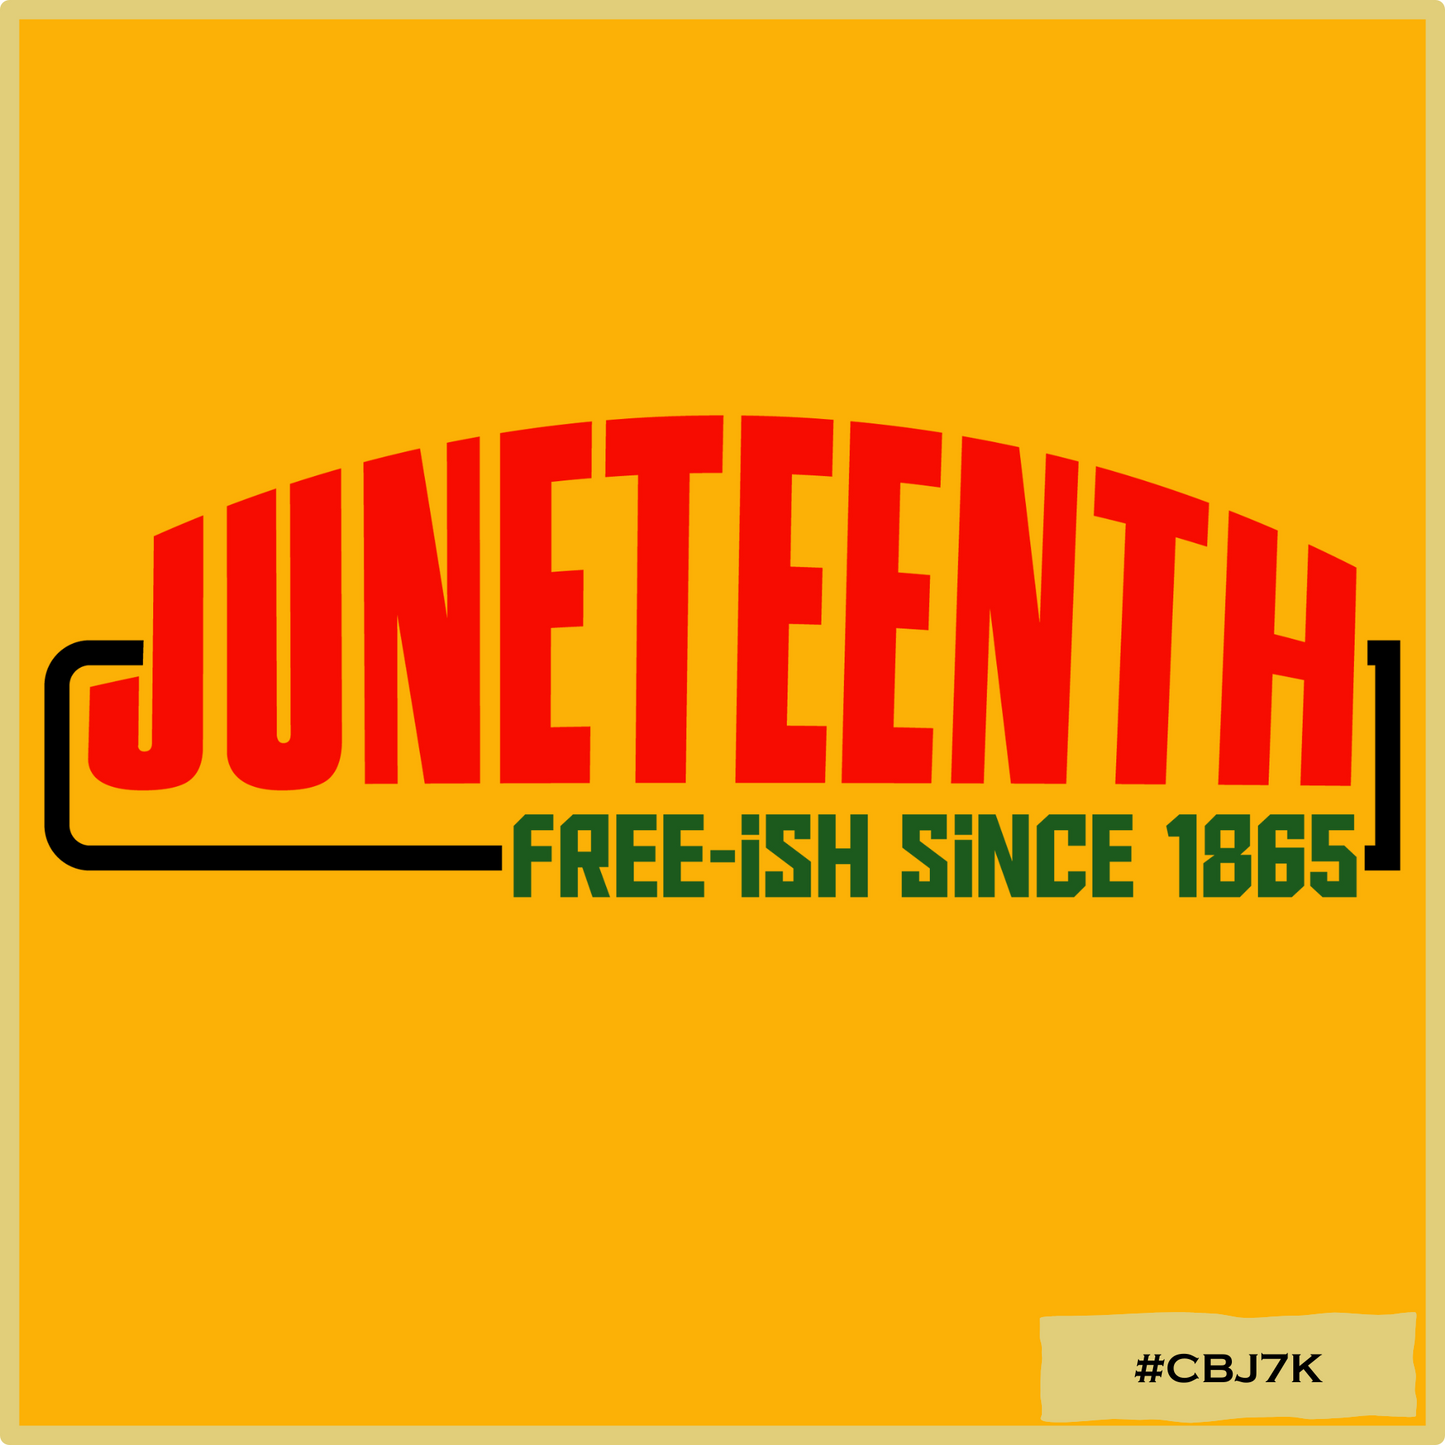 Juneteenth Free-ish Since 1865 #5